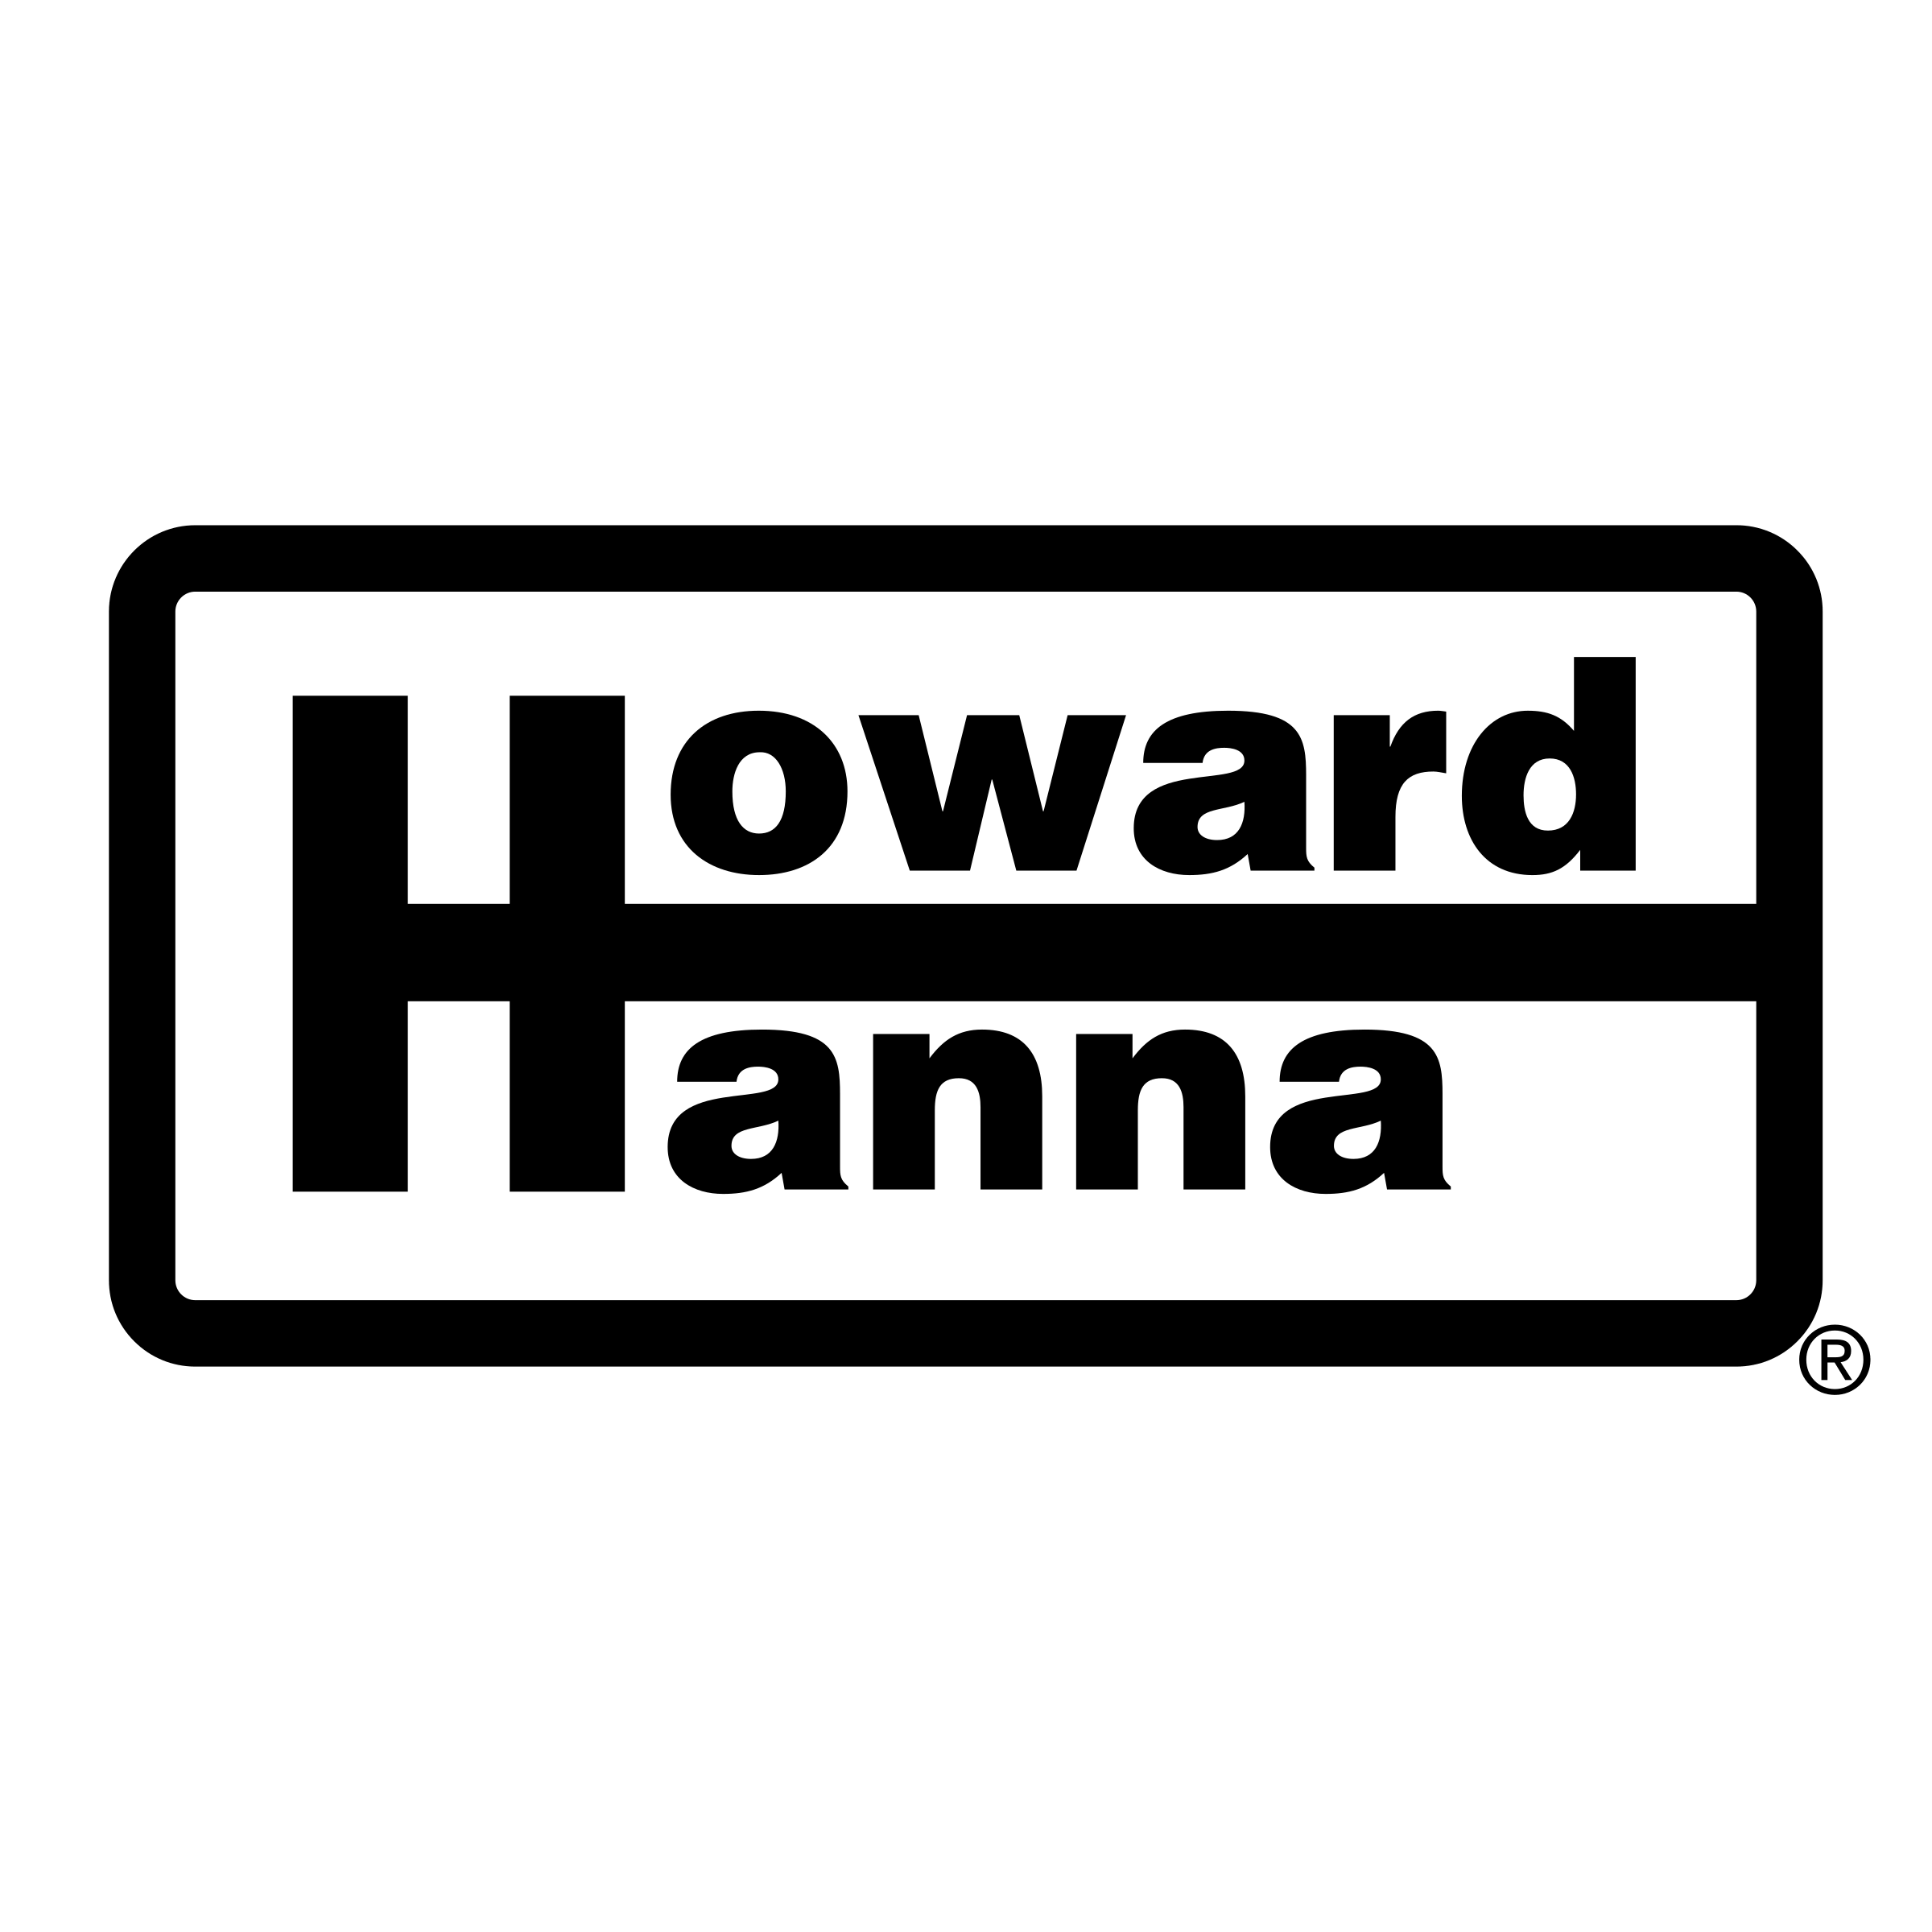 Howard Supply Logo - Howard Hanna Logo PNG Transparent & SVG Vector